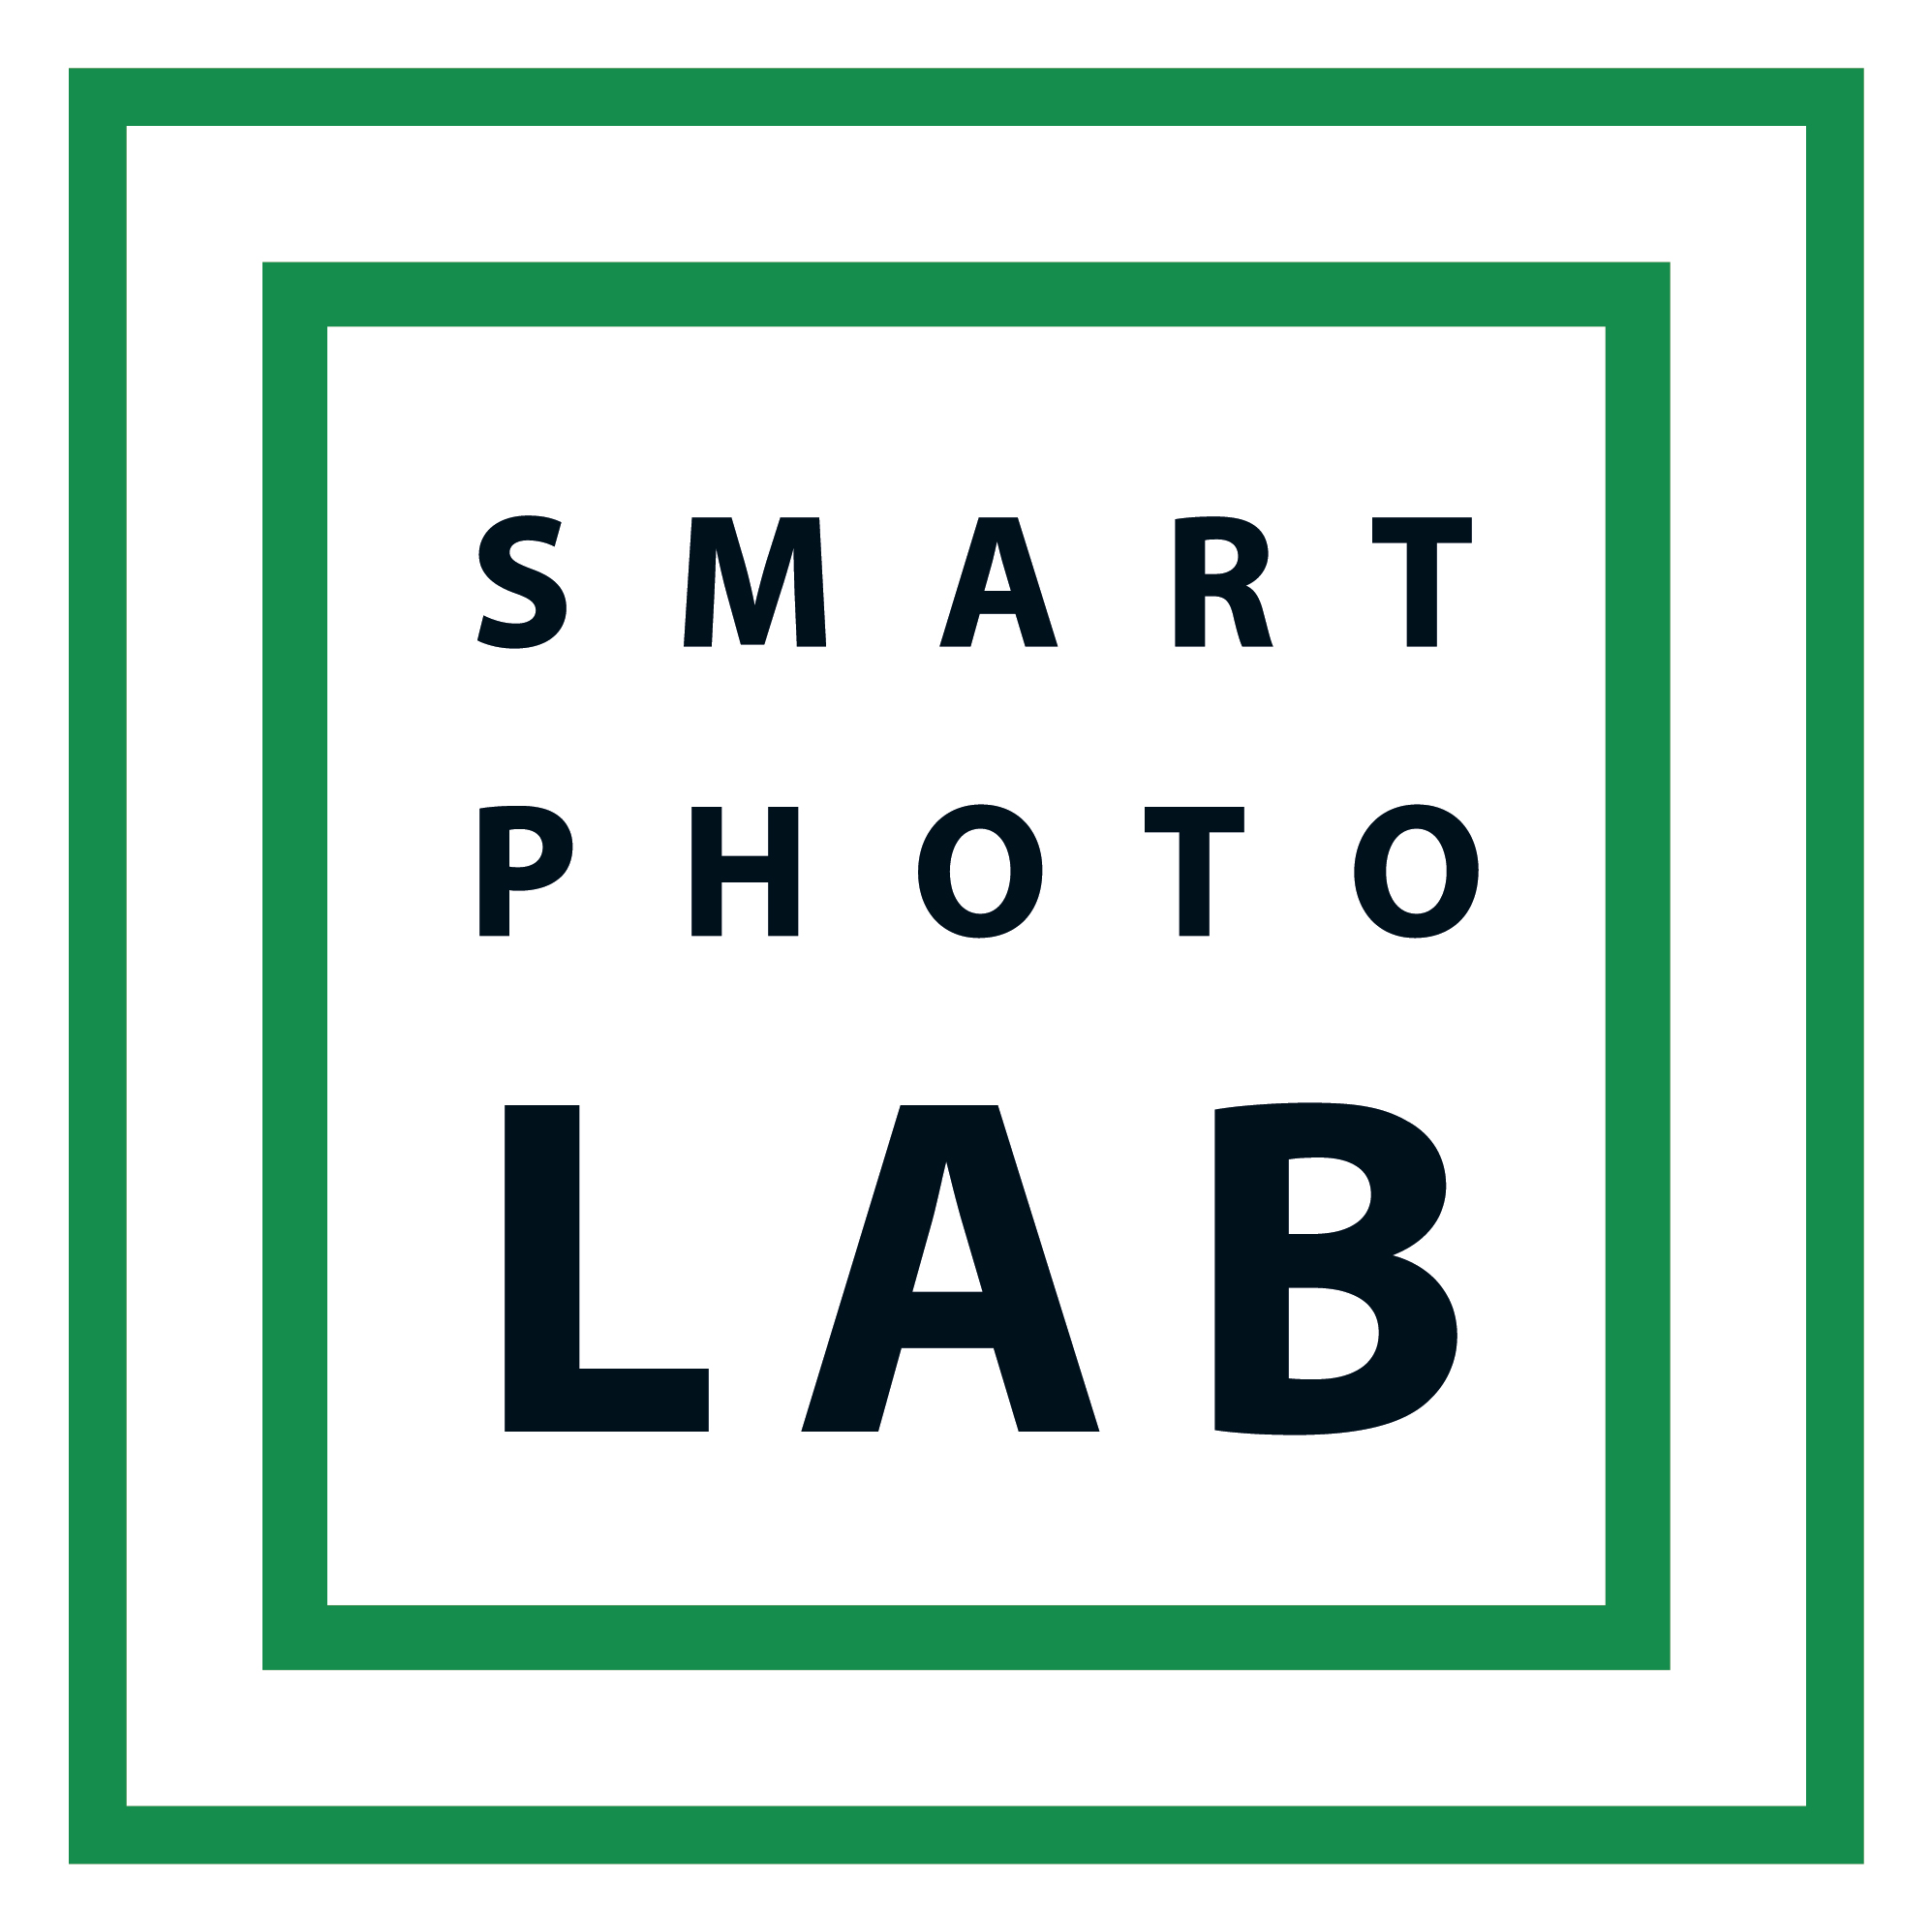 SmartPhotoLab